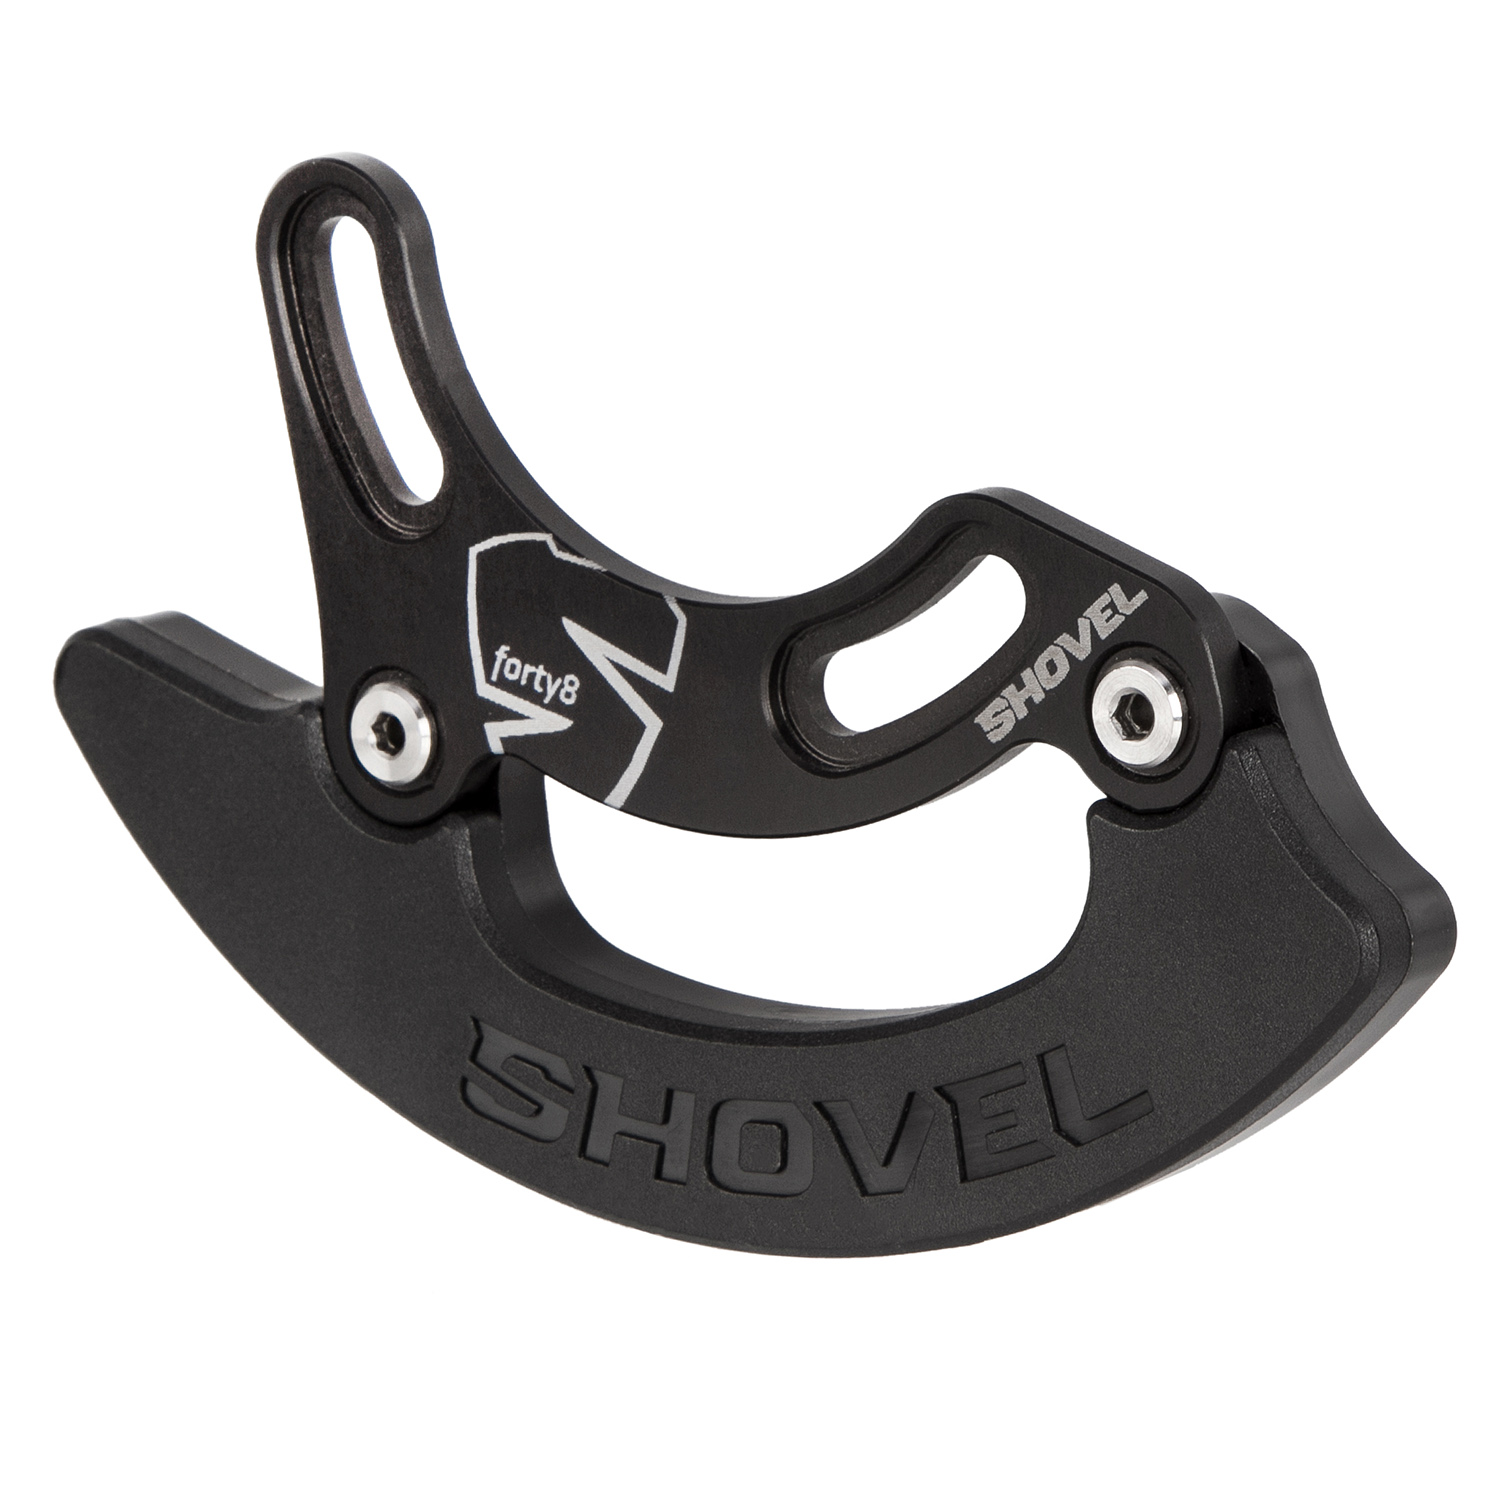 Shovel Guide Chaîne Forty8 Black, 28-36 Teeth, ISCG05